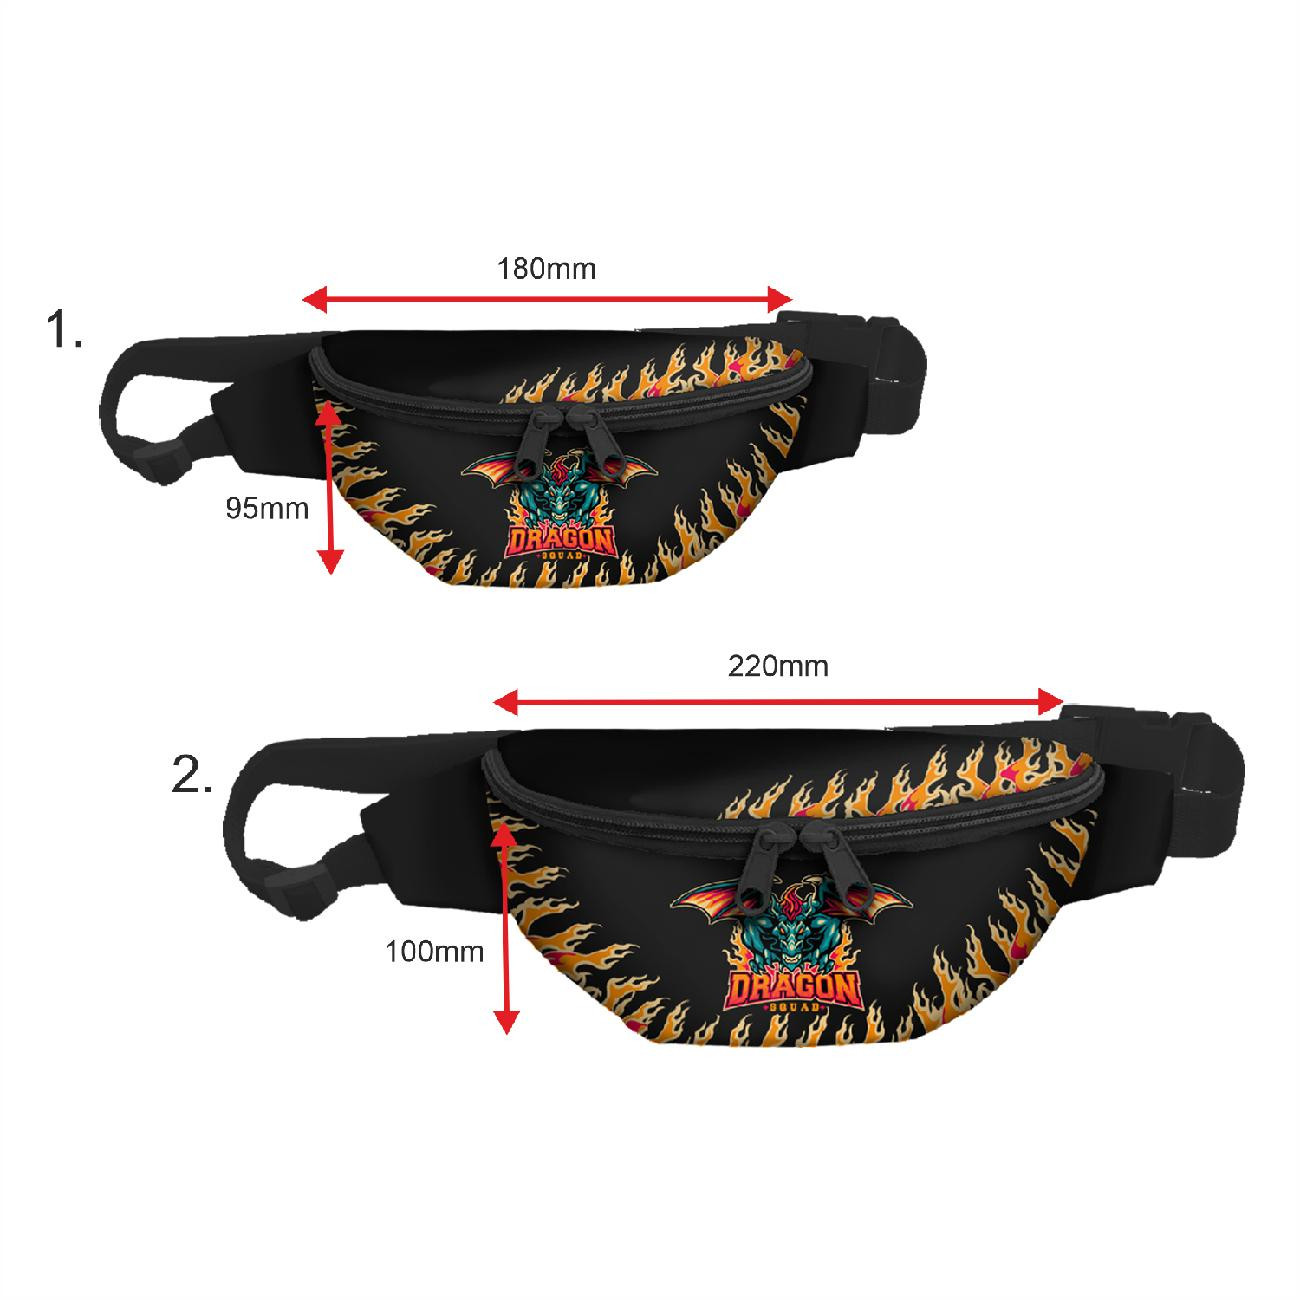 HIP BAG - DRAGON PAT. 1 / black / Choice of sizes